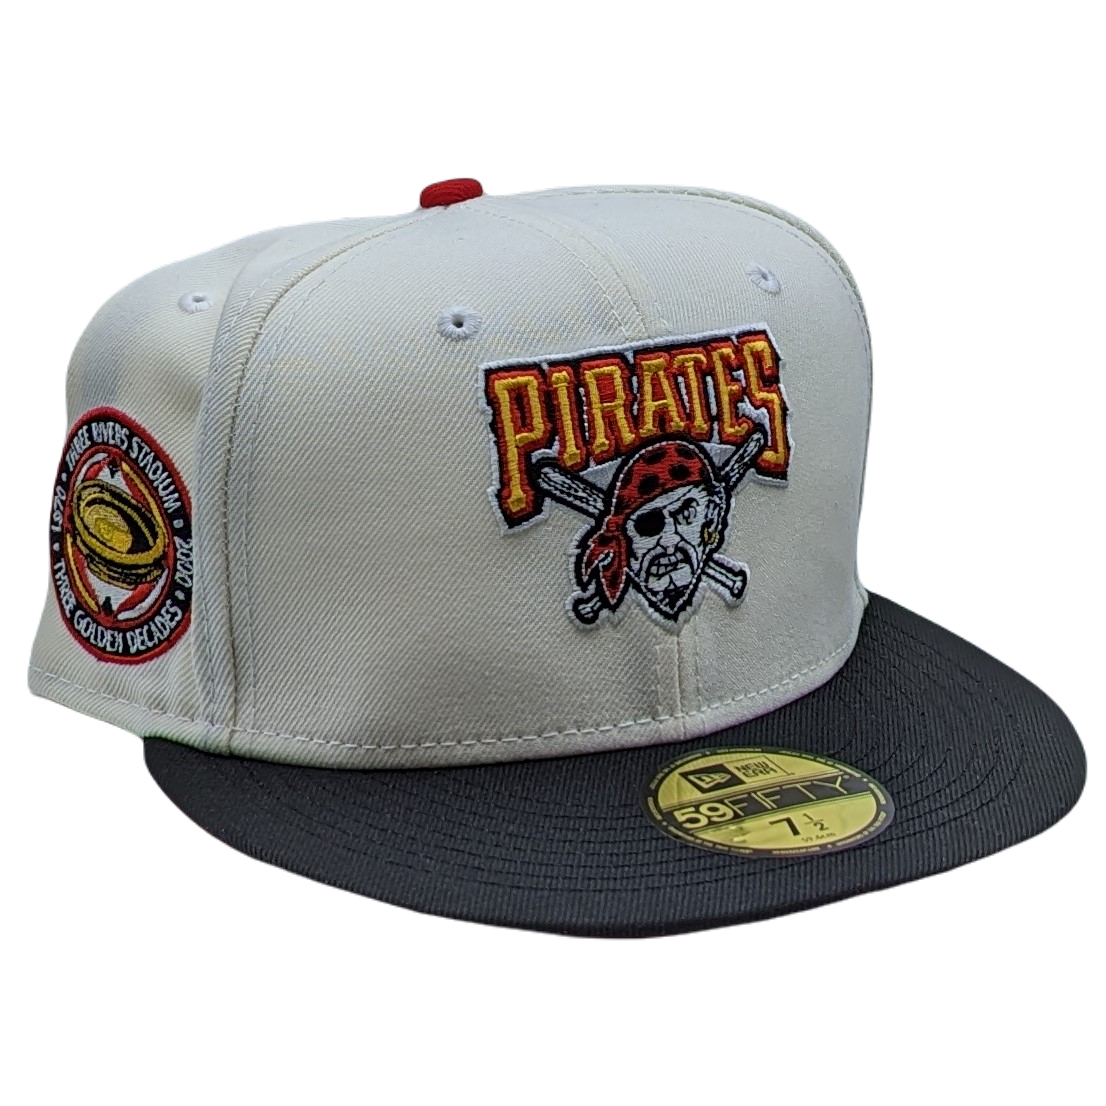 New Era Pittsburgh Pirates T-shirts in Pittsburgh Pirates Team Shop 